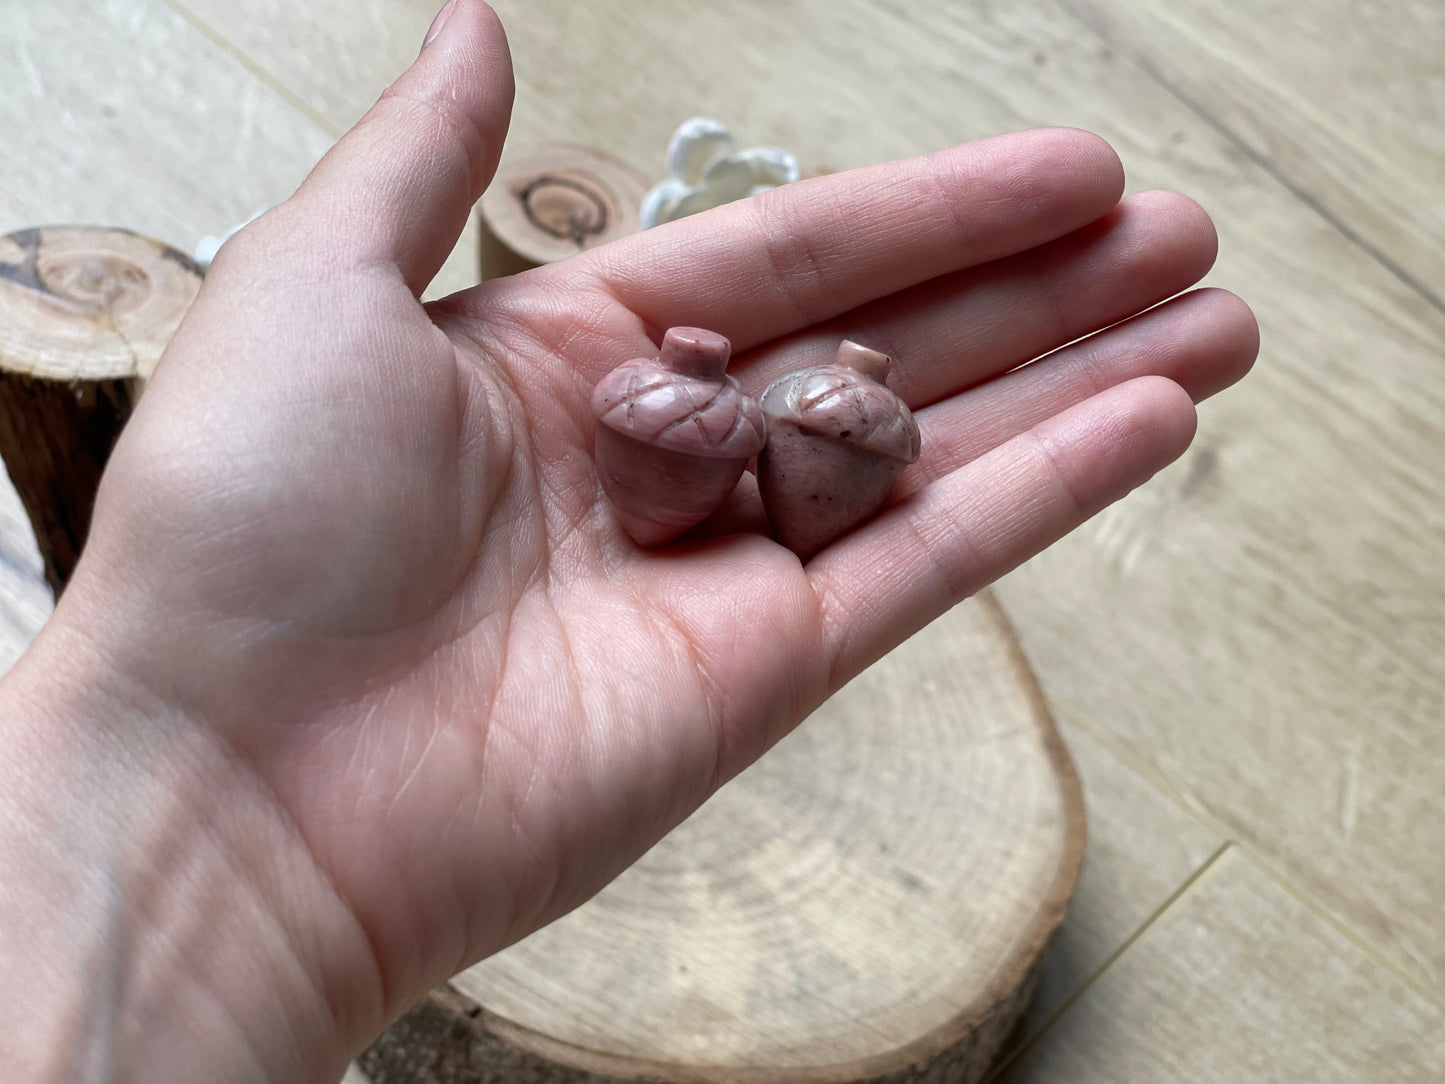 Crystal acorns